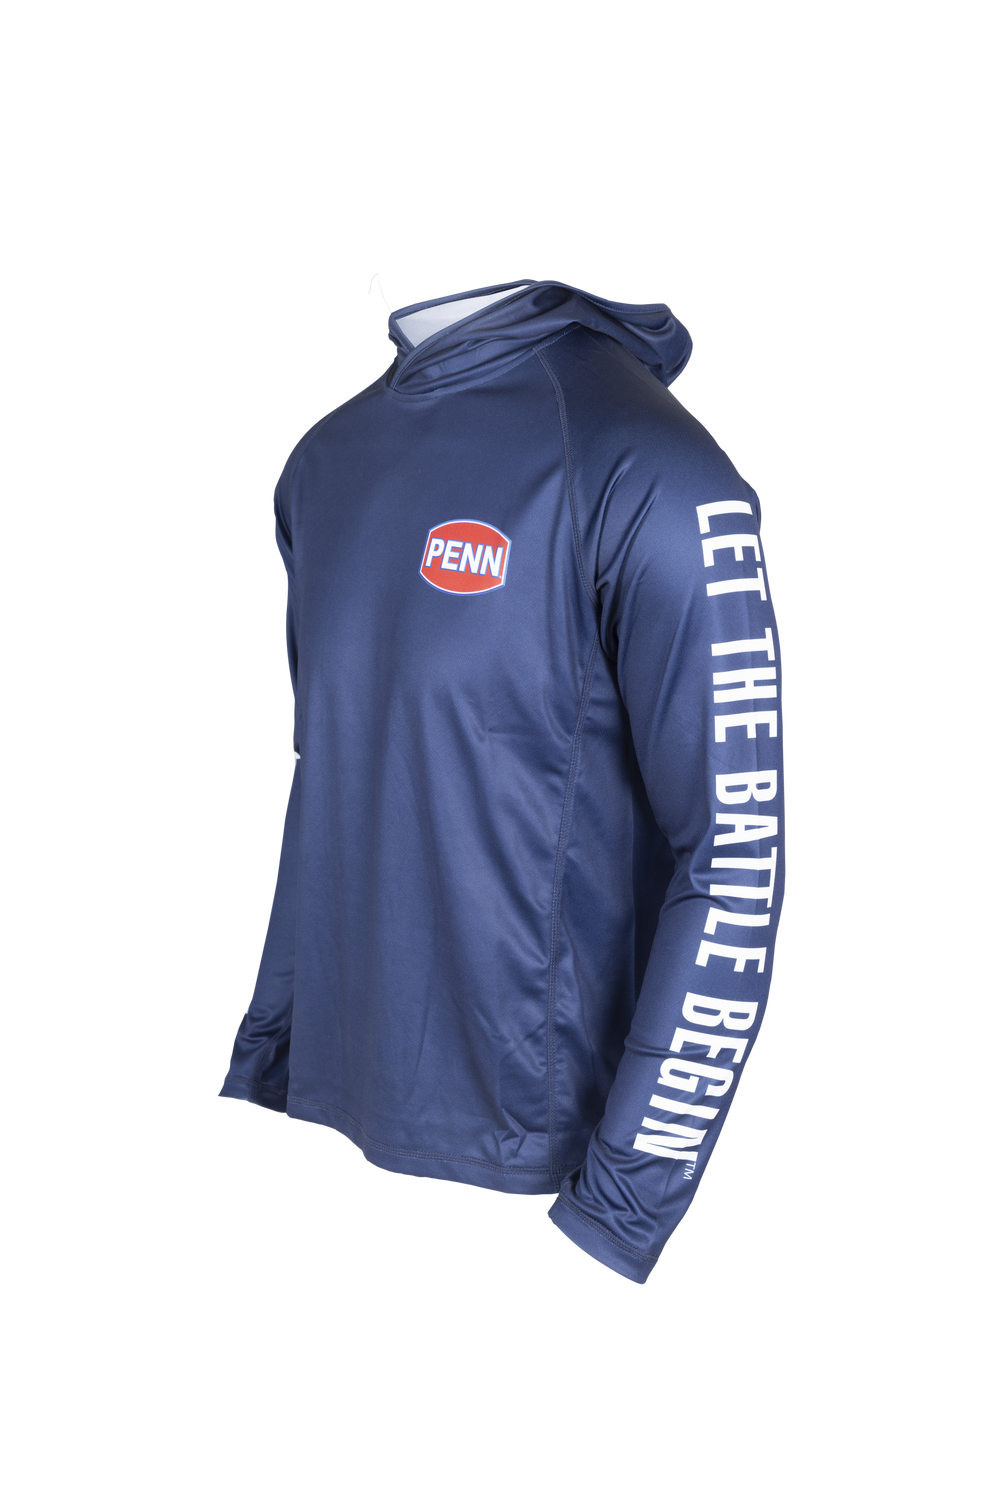 Penn 2022 Pro Long Sleeve Hooded Fishing Jersey Shirt - Choose